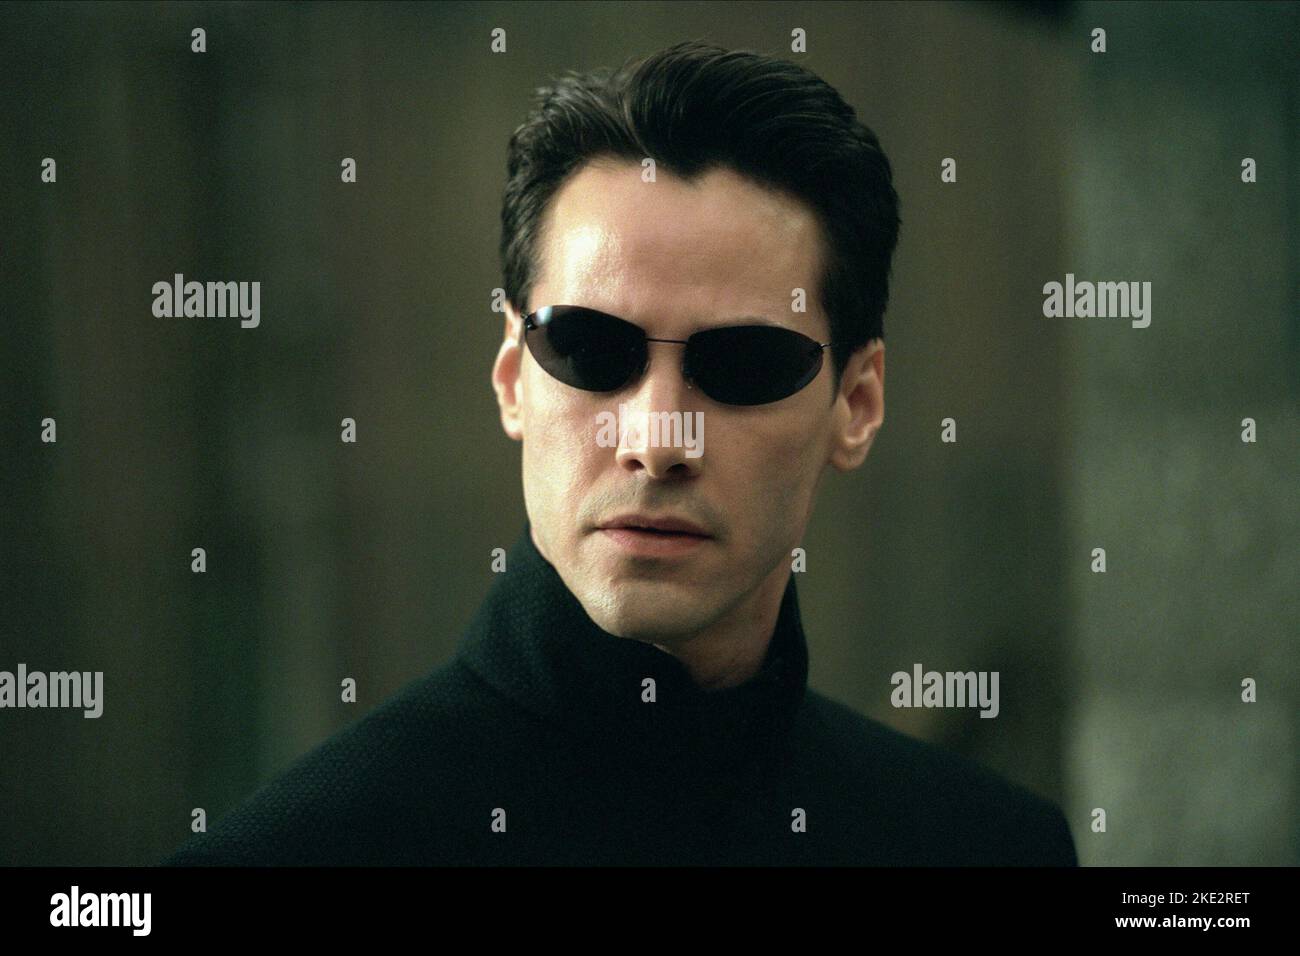 Discover more than 220 matrix reloaded sunglasses